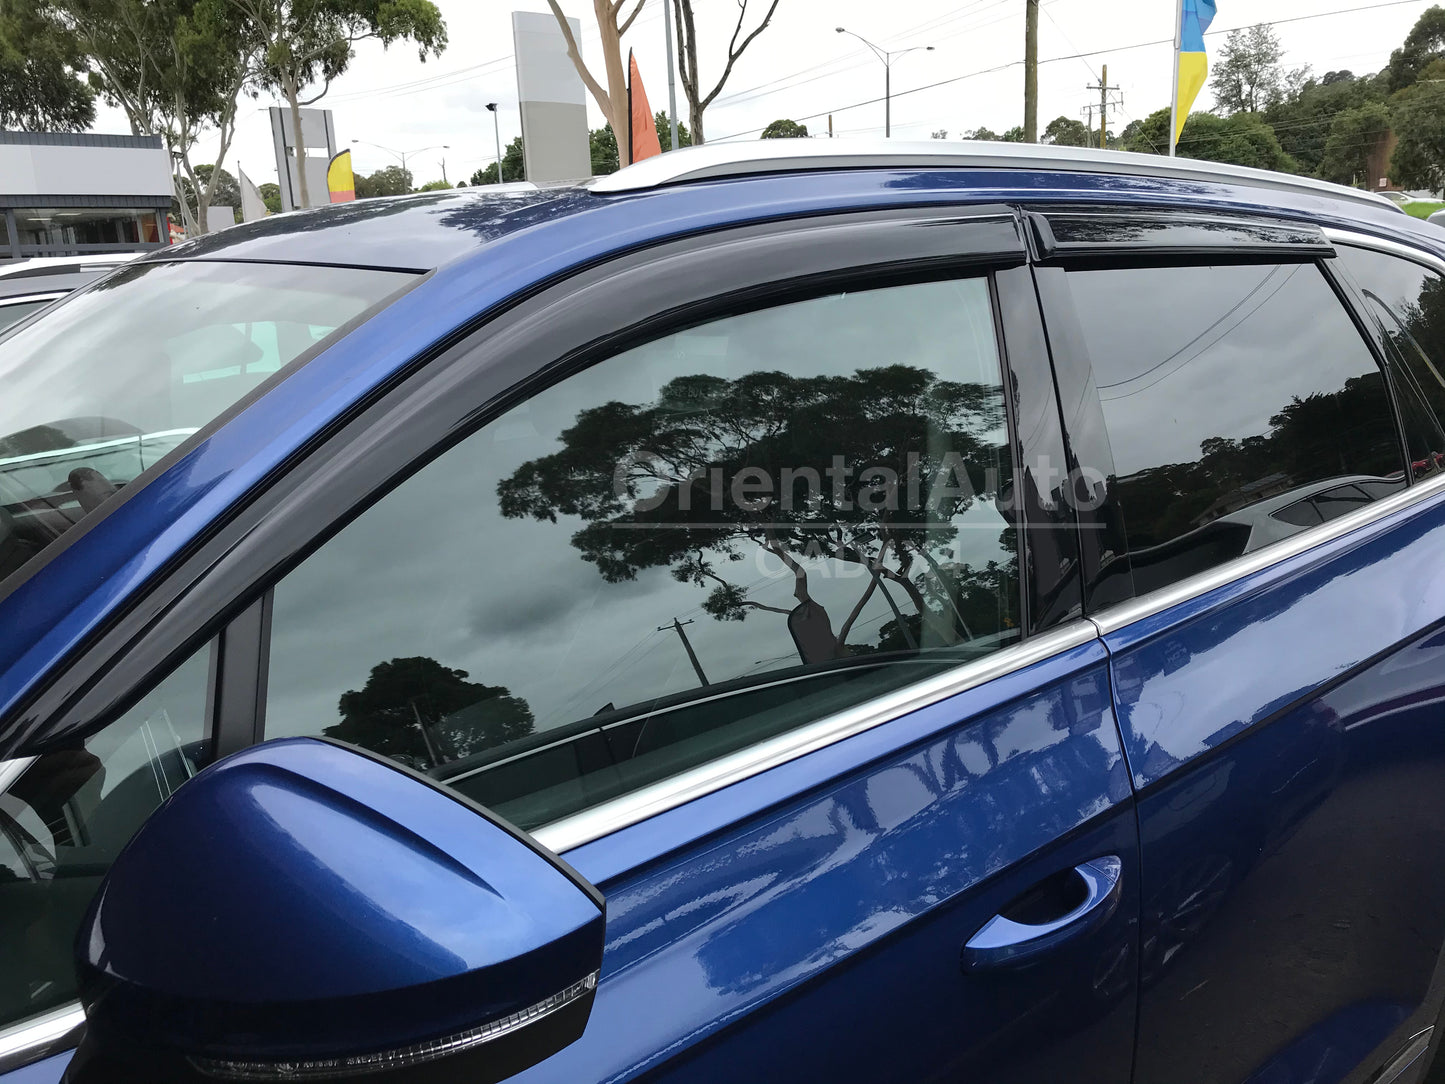 Luxury Weather Shields for Volkswagen Touareg CR 2019+ Weathershields Window Visors